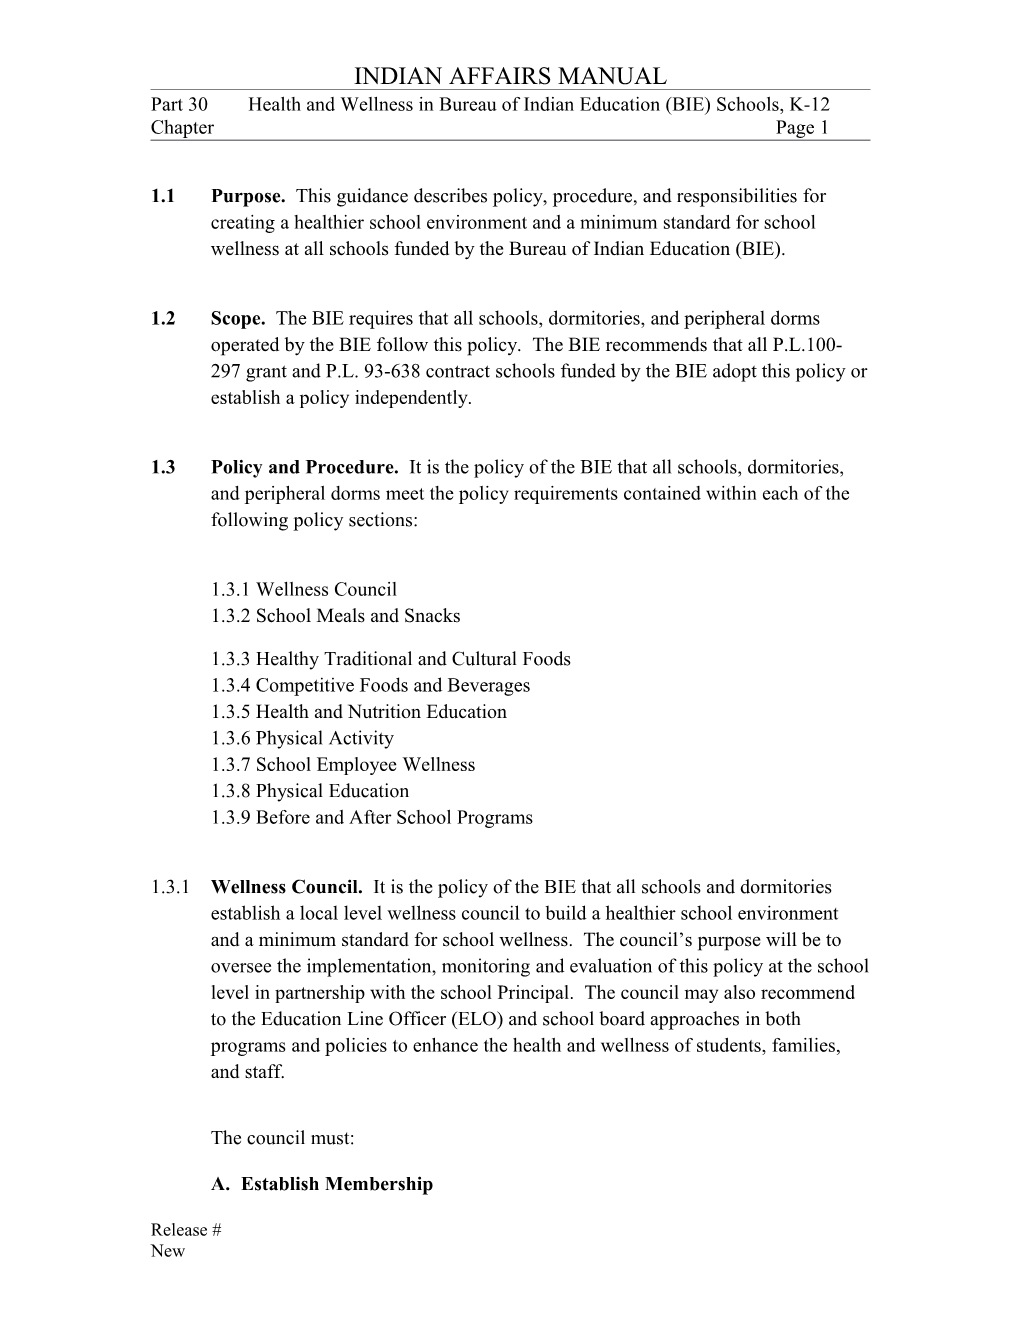 Part 30 Health and Wellness in Bureau of Indian Education (BIE) Schools, K-12